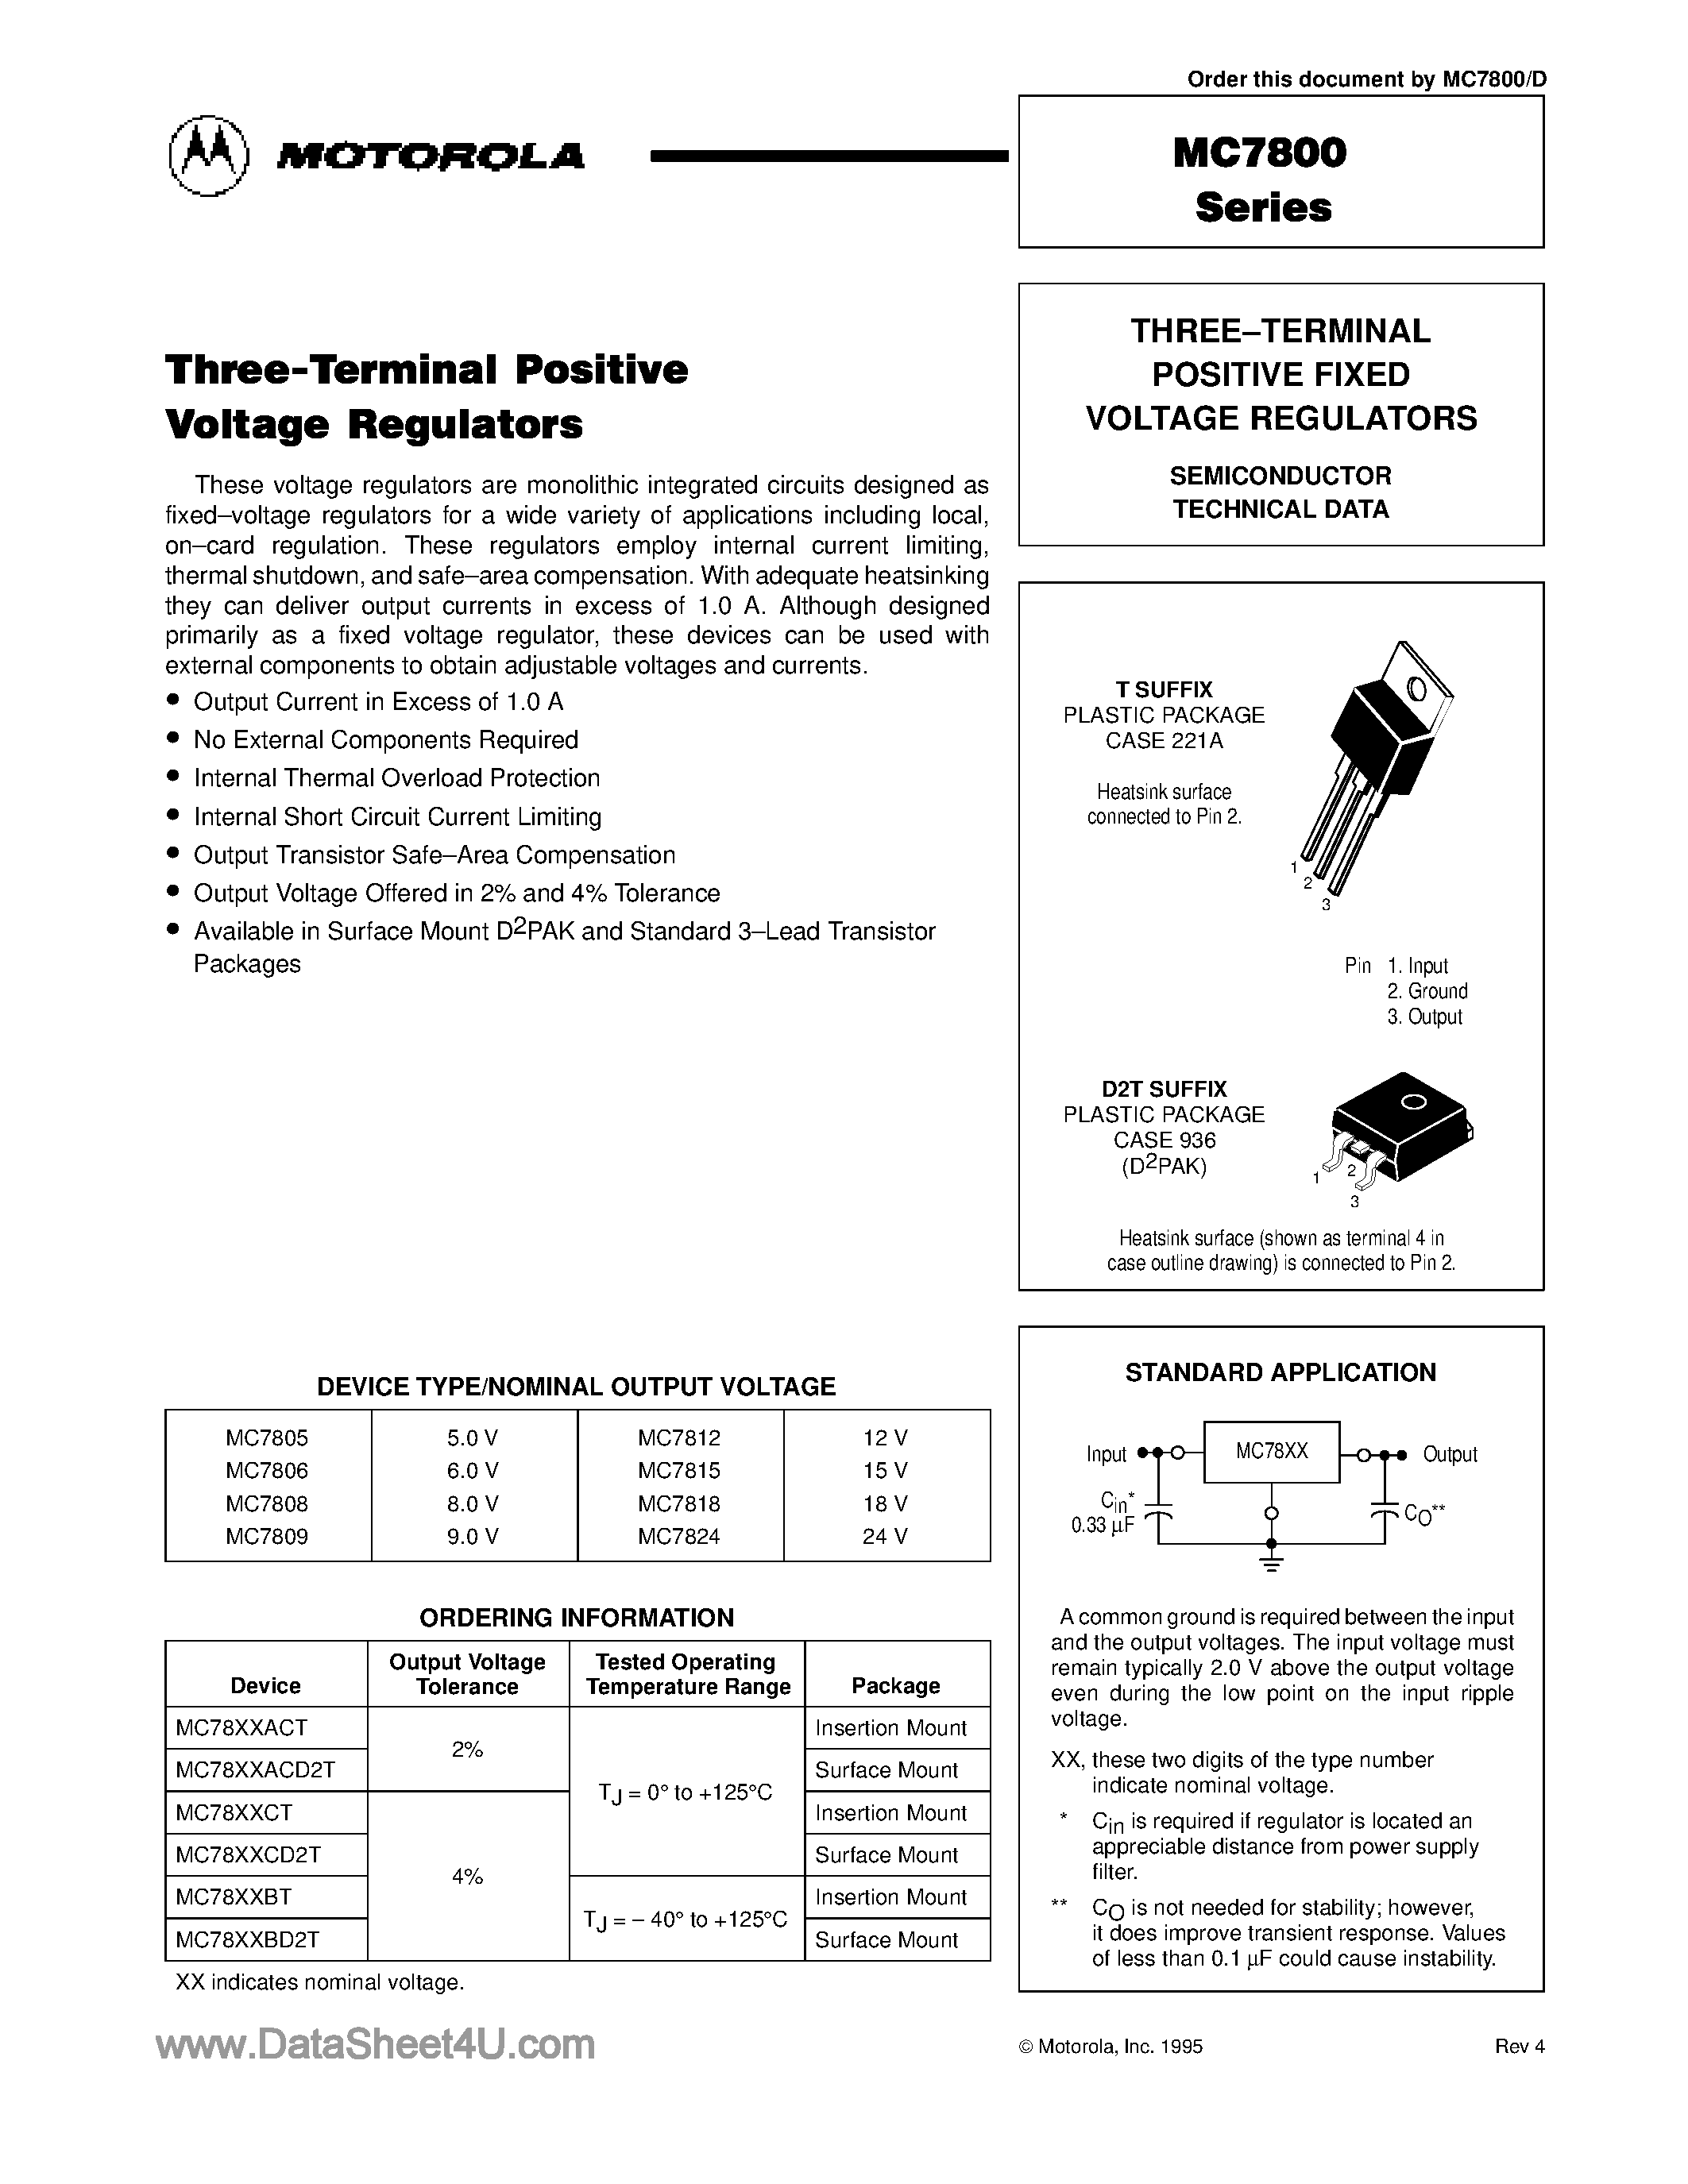 Datasheet MC7800 - (MC7800 Series) THREE TERMINAL POSITIVE FIXED VOLTAGE REGULATORS page 1